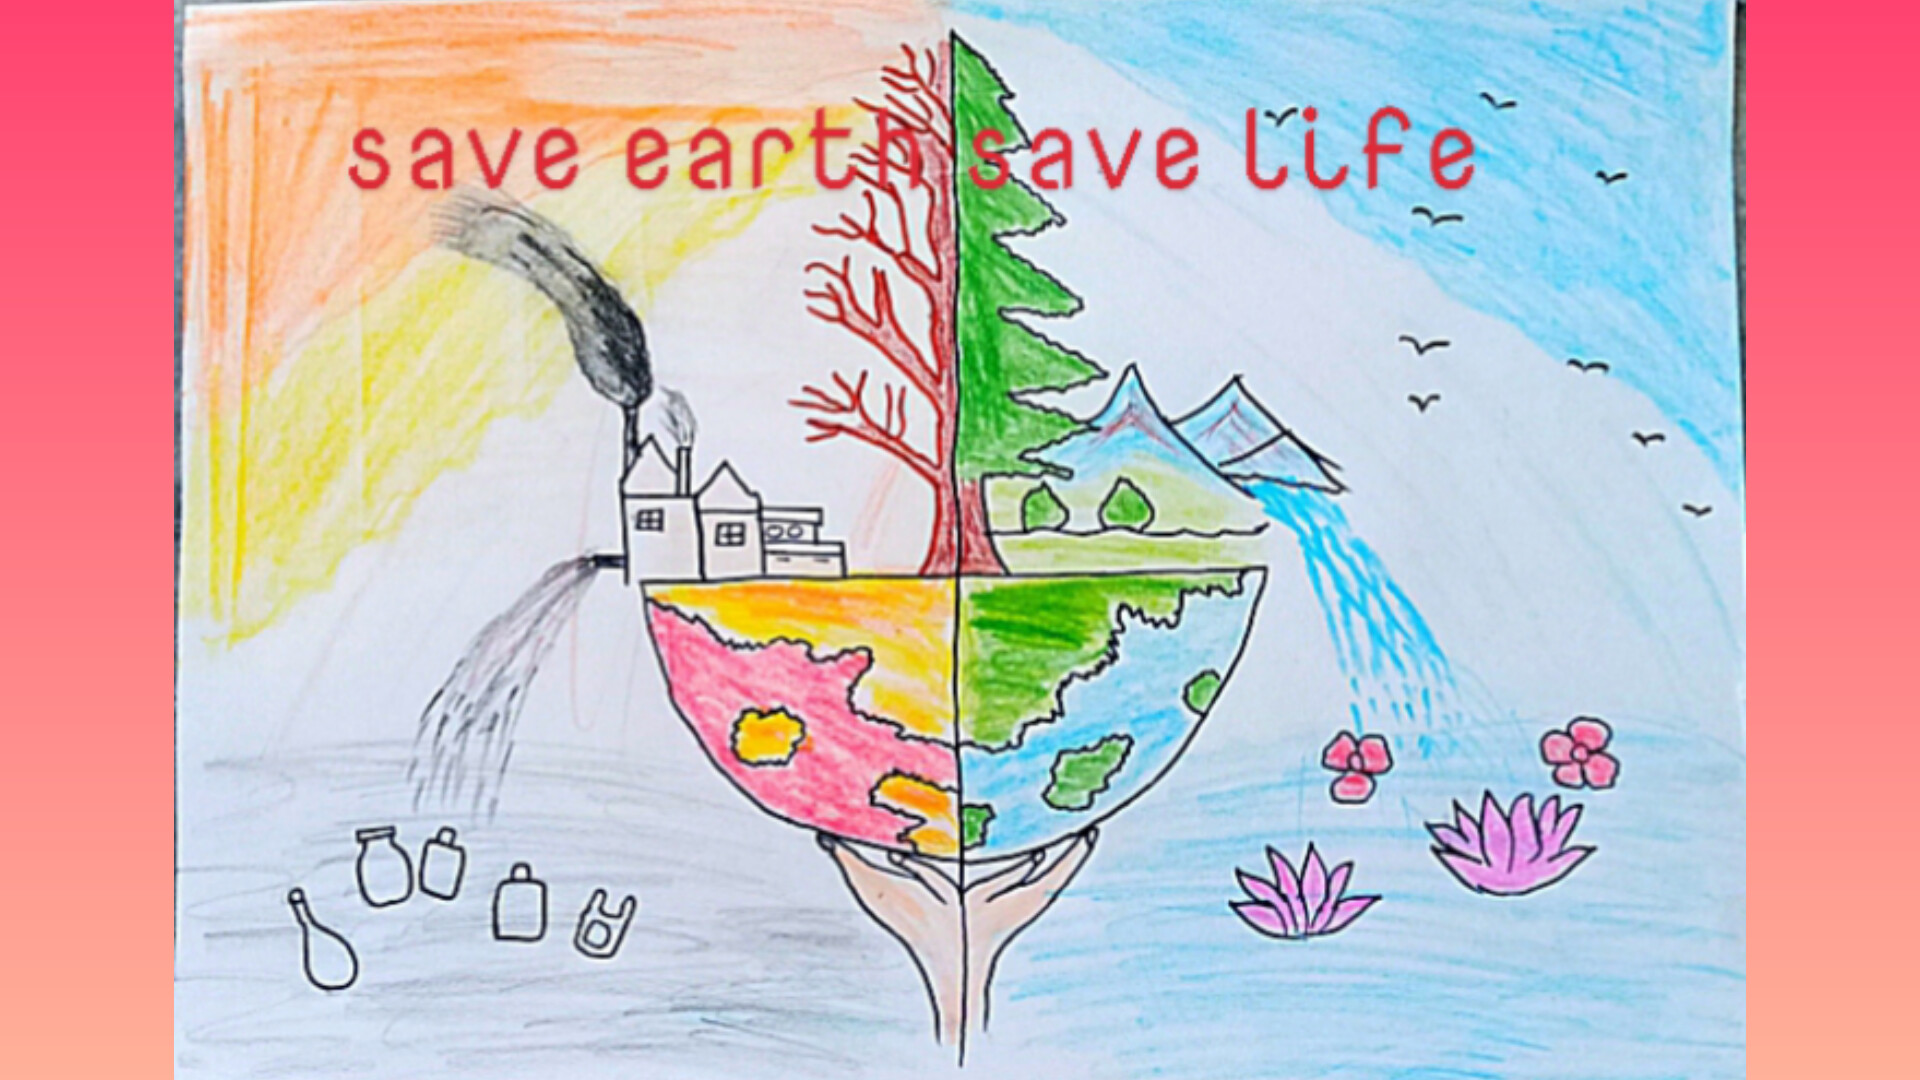 Mahreen Haider Creations on X Save Earth Drawing  Save Tree  Save  Water  Poster httpstco0GEdzAz4B0 drawing poster saveearthdrawing  gogreen nature savetheplanet environment savewater earth plasticfree  savenature India 